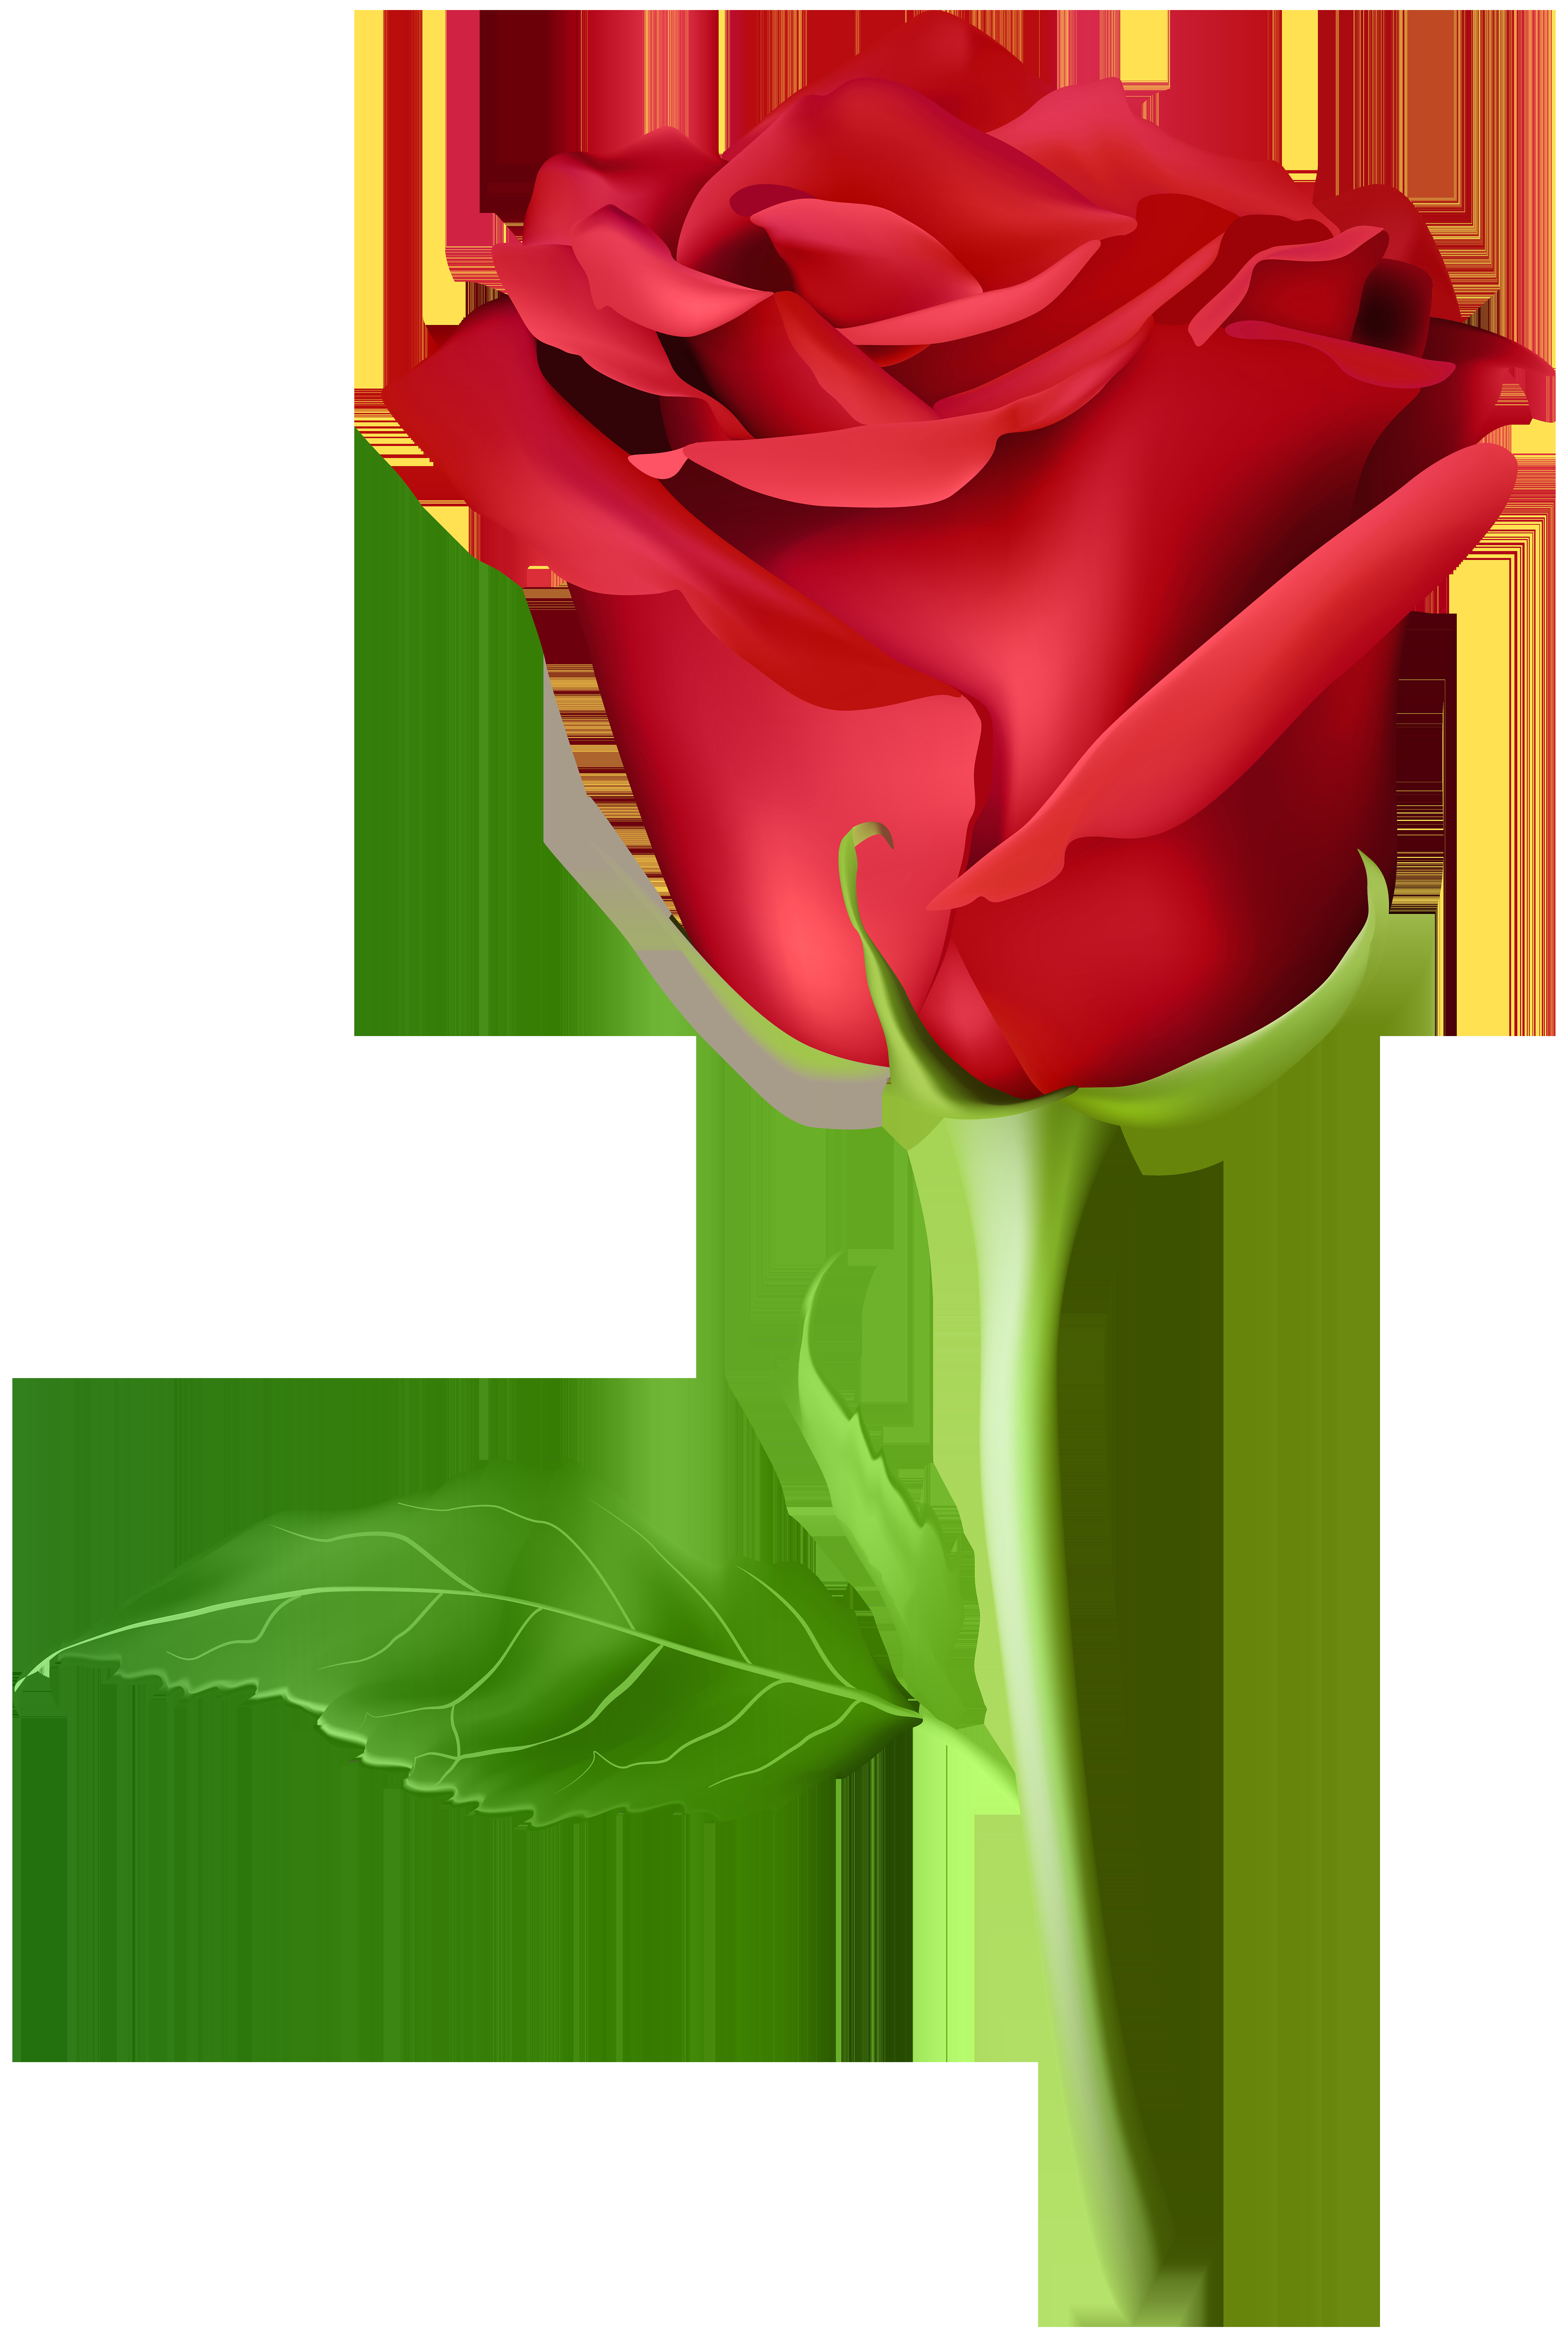 Drawing Of A Pink Rose Pin by Kittu Raja On Nk Red Roses Rose Pink Roses